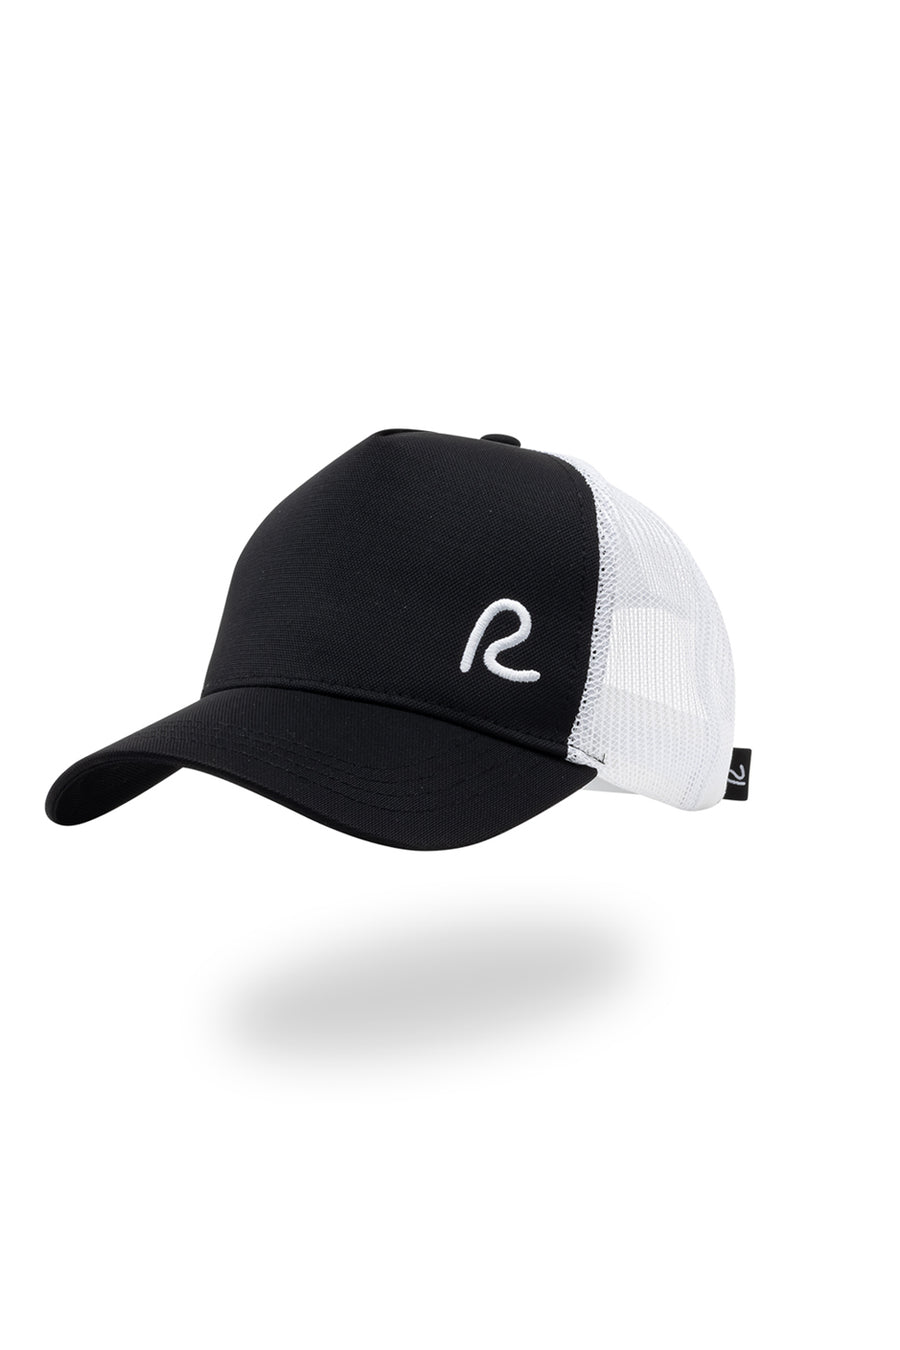 Rewired Essential R Trucker Cap - Black Two Tone